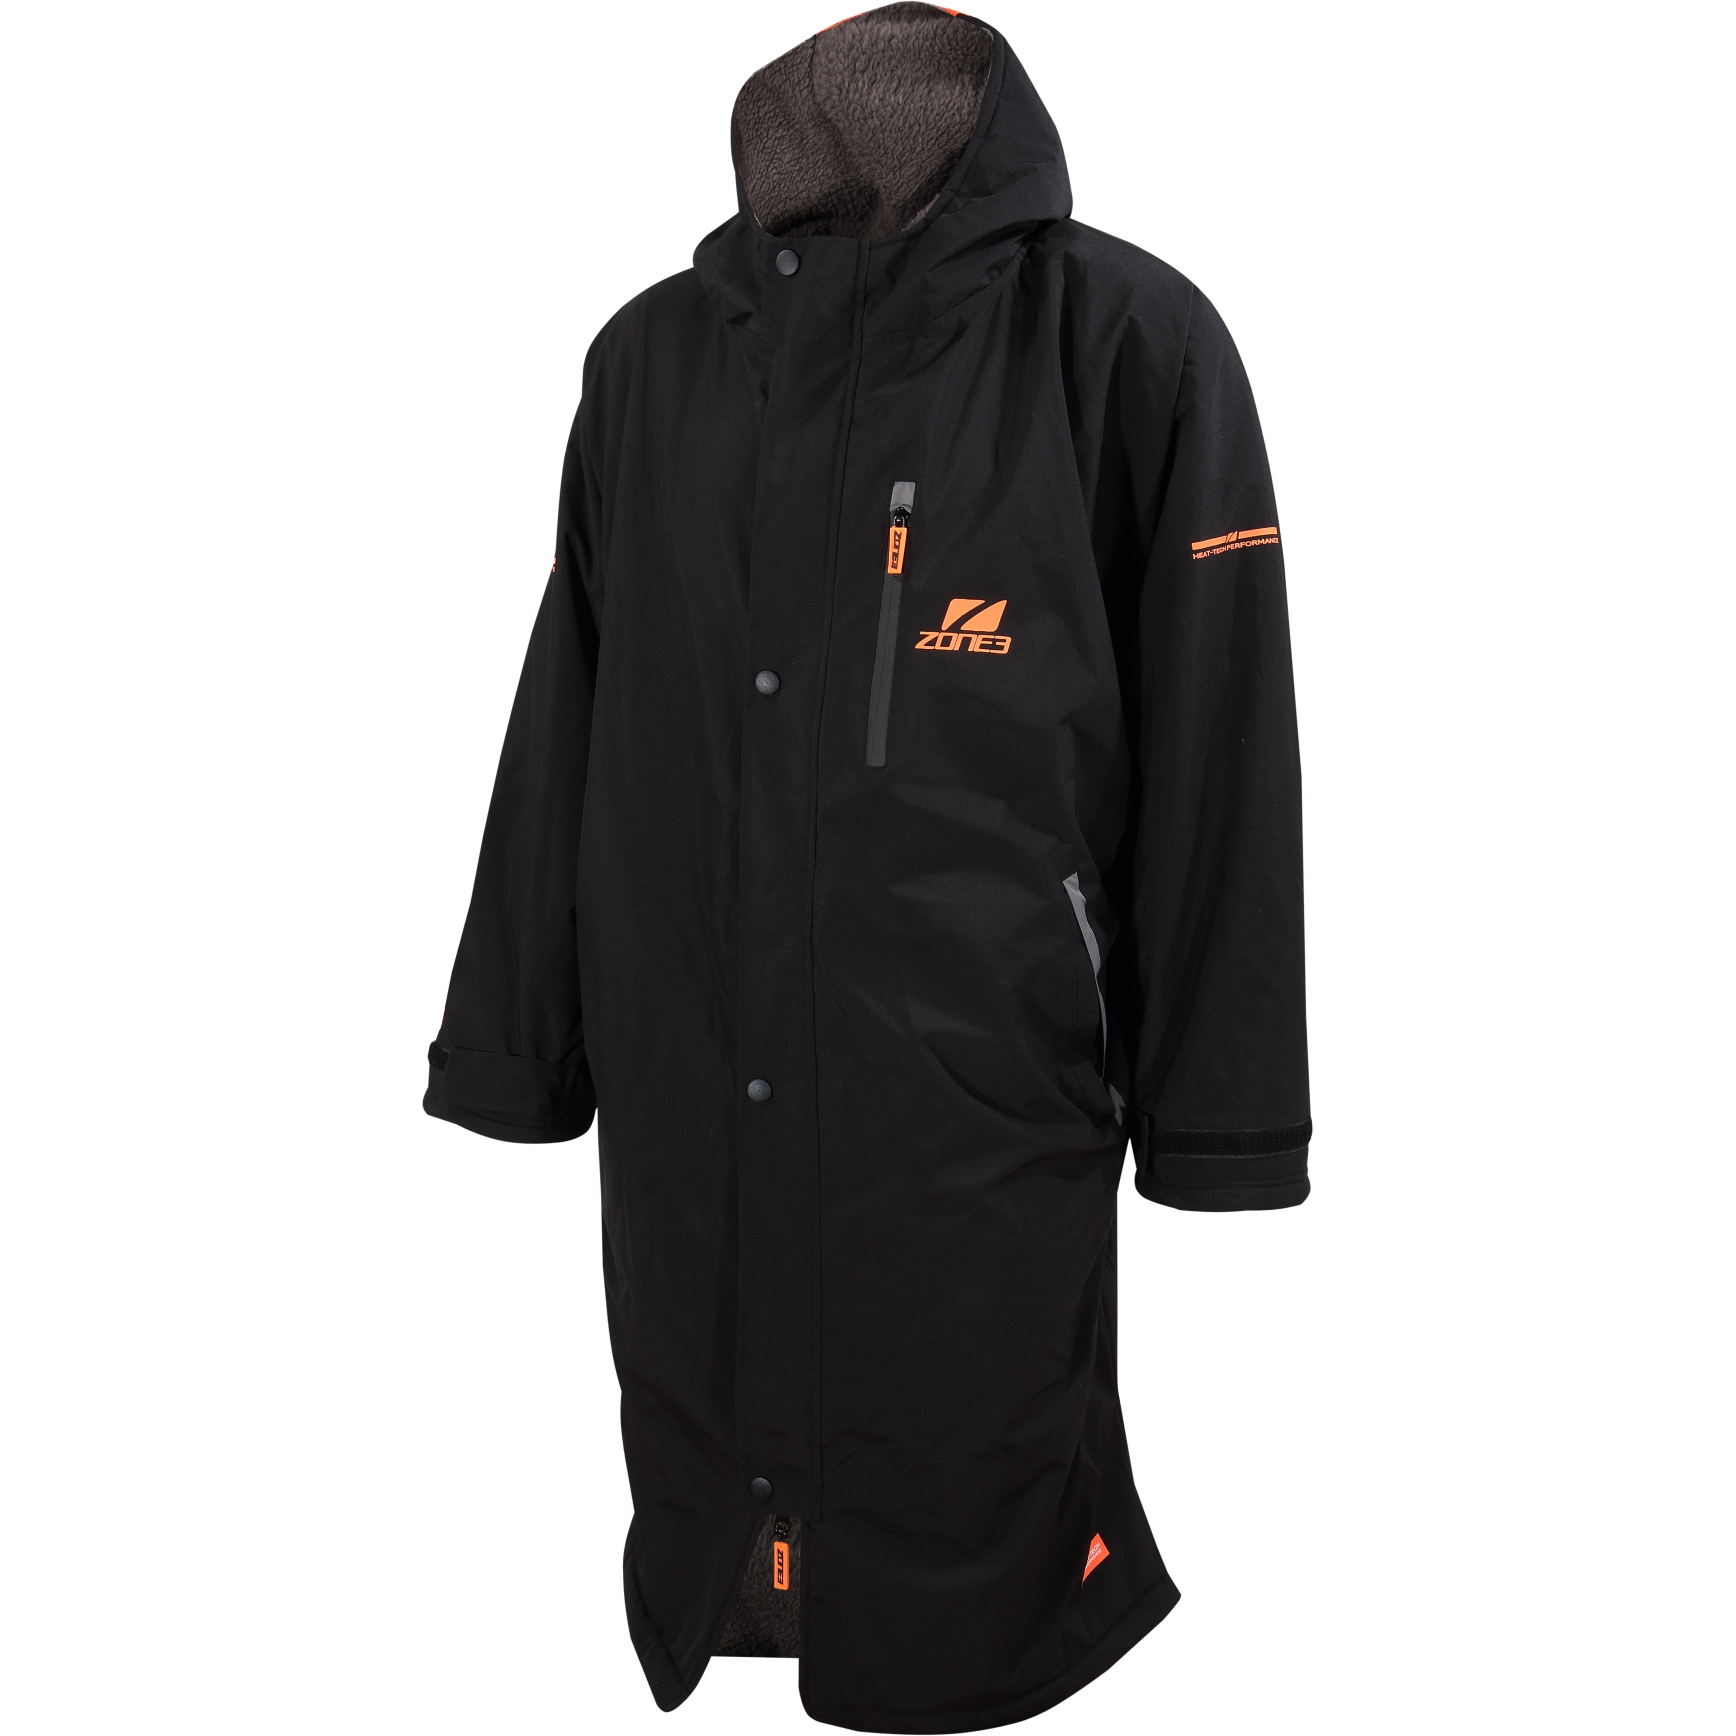 Productfoto van Zone3 Oversized Polar Fleece Parka Robe Jacket - Black/Orange